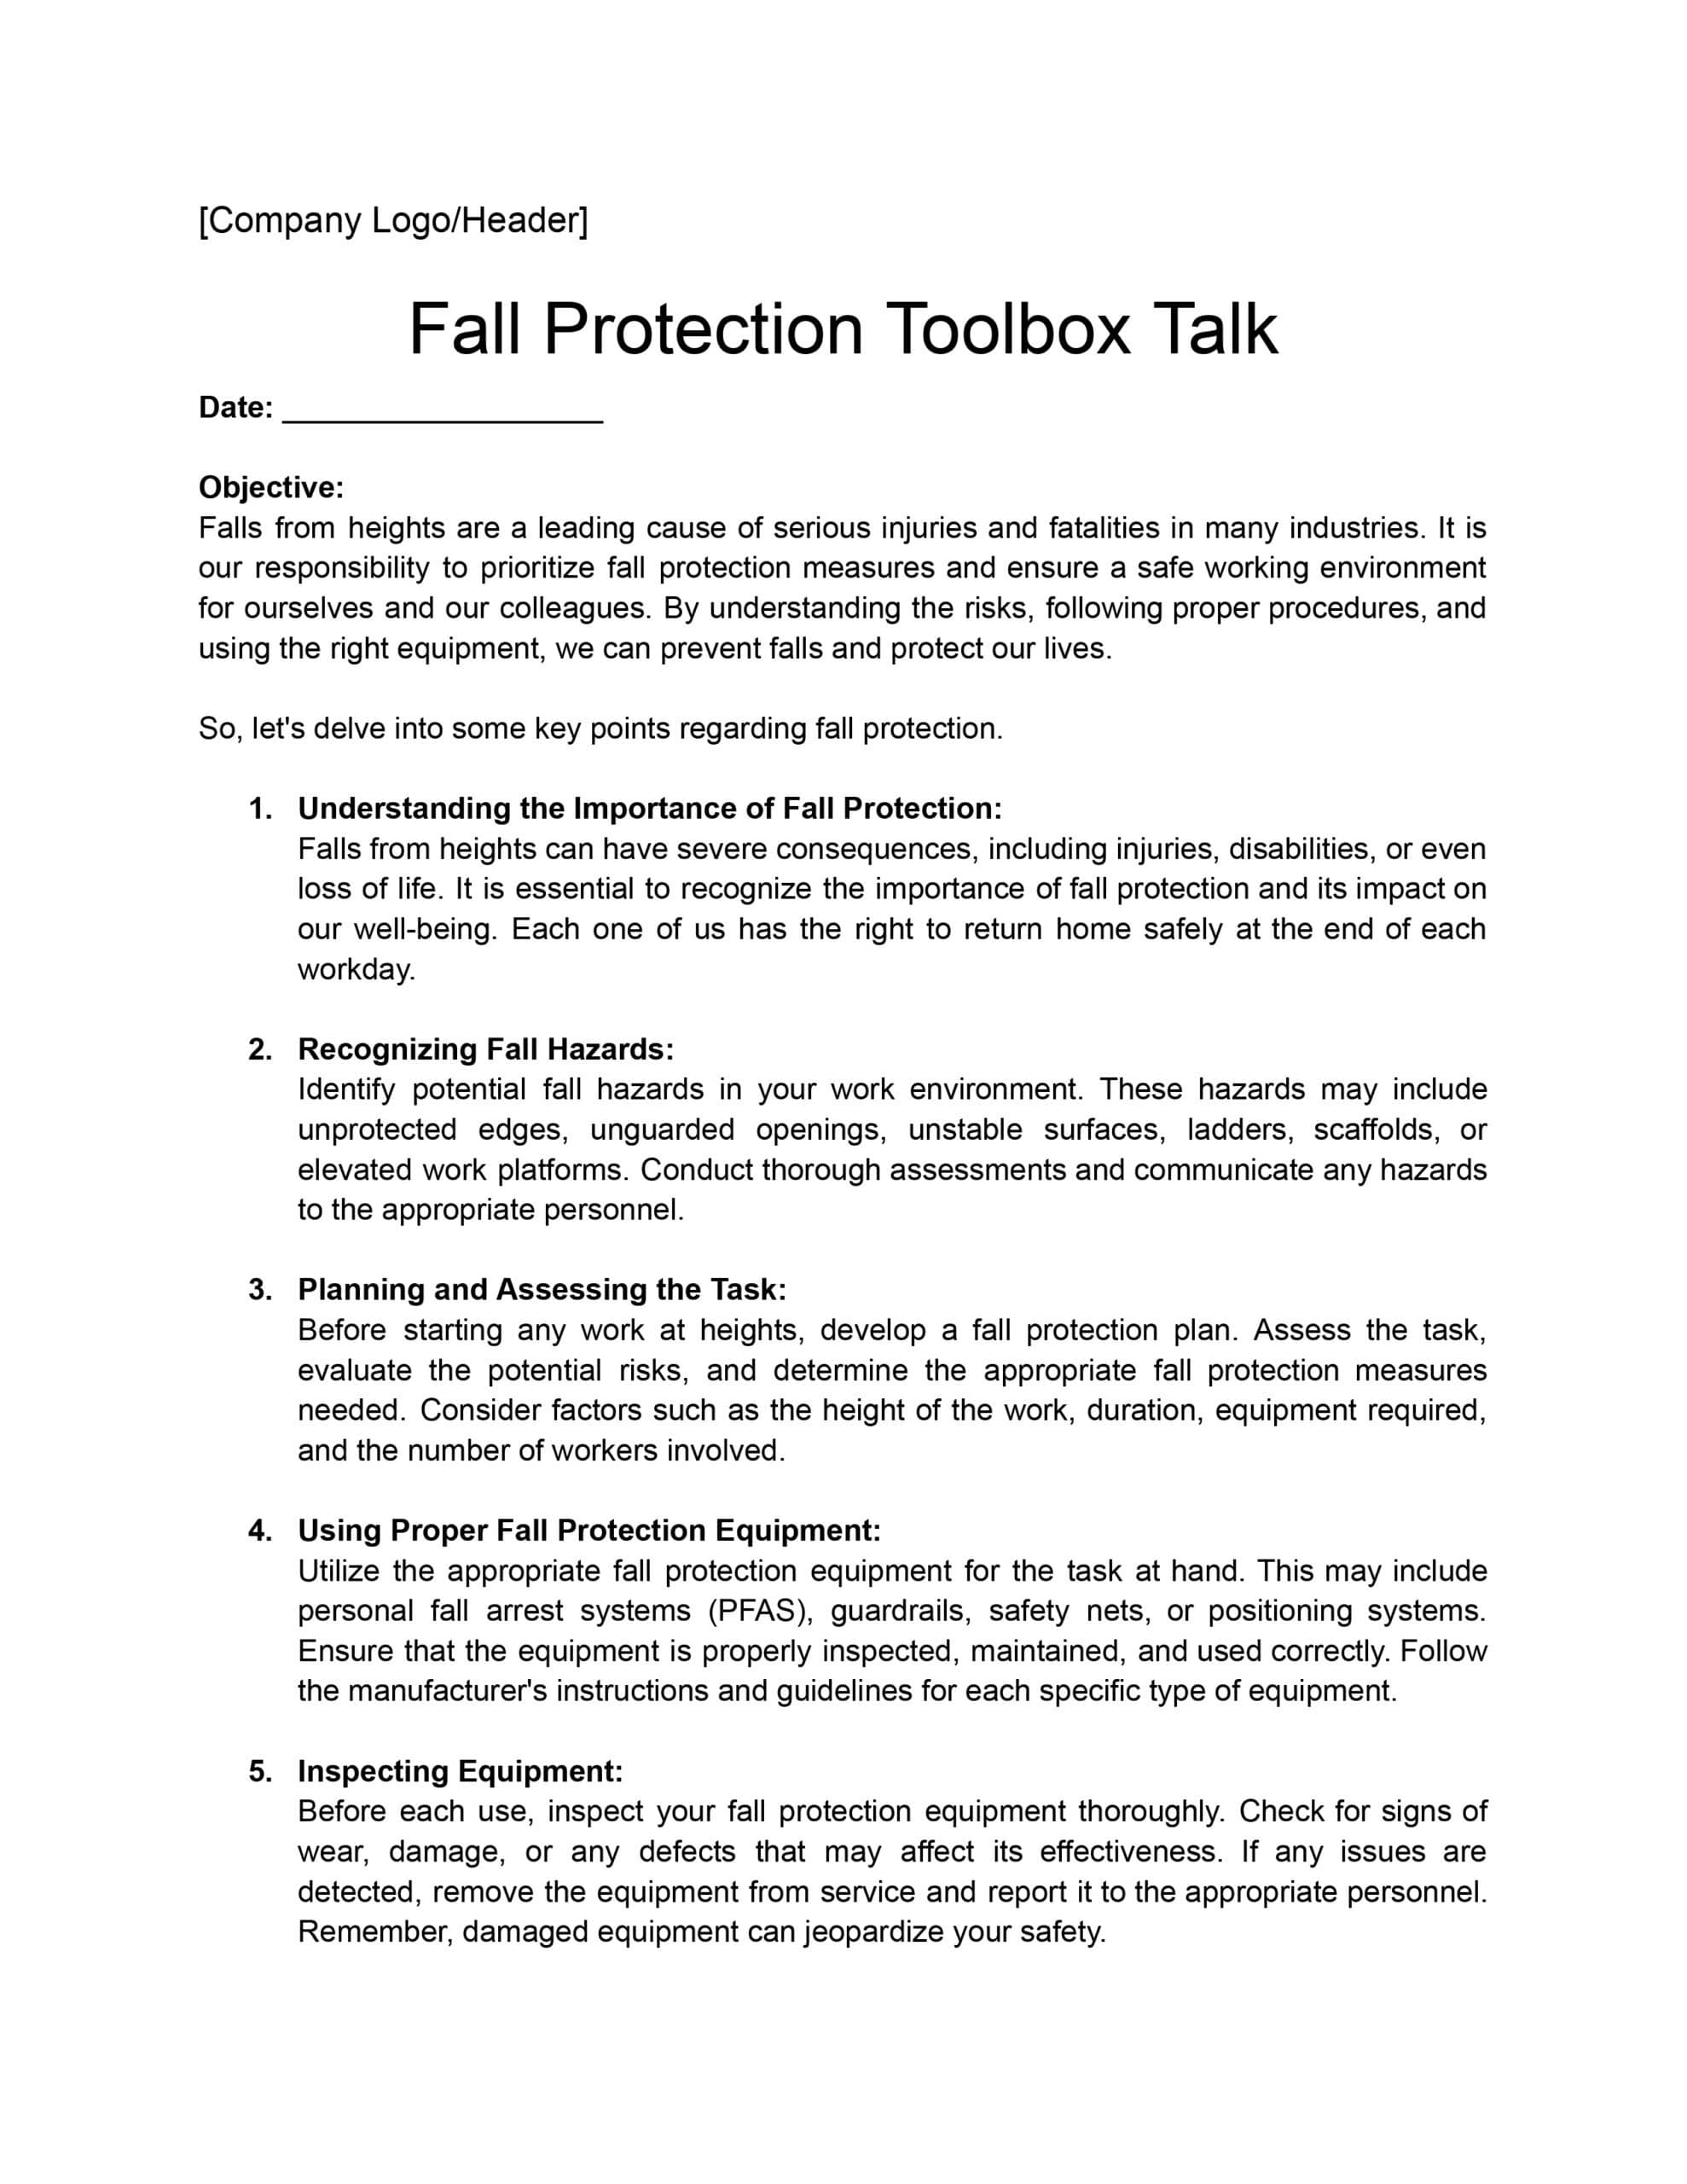 Fall Protection Toolbox Talk